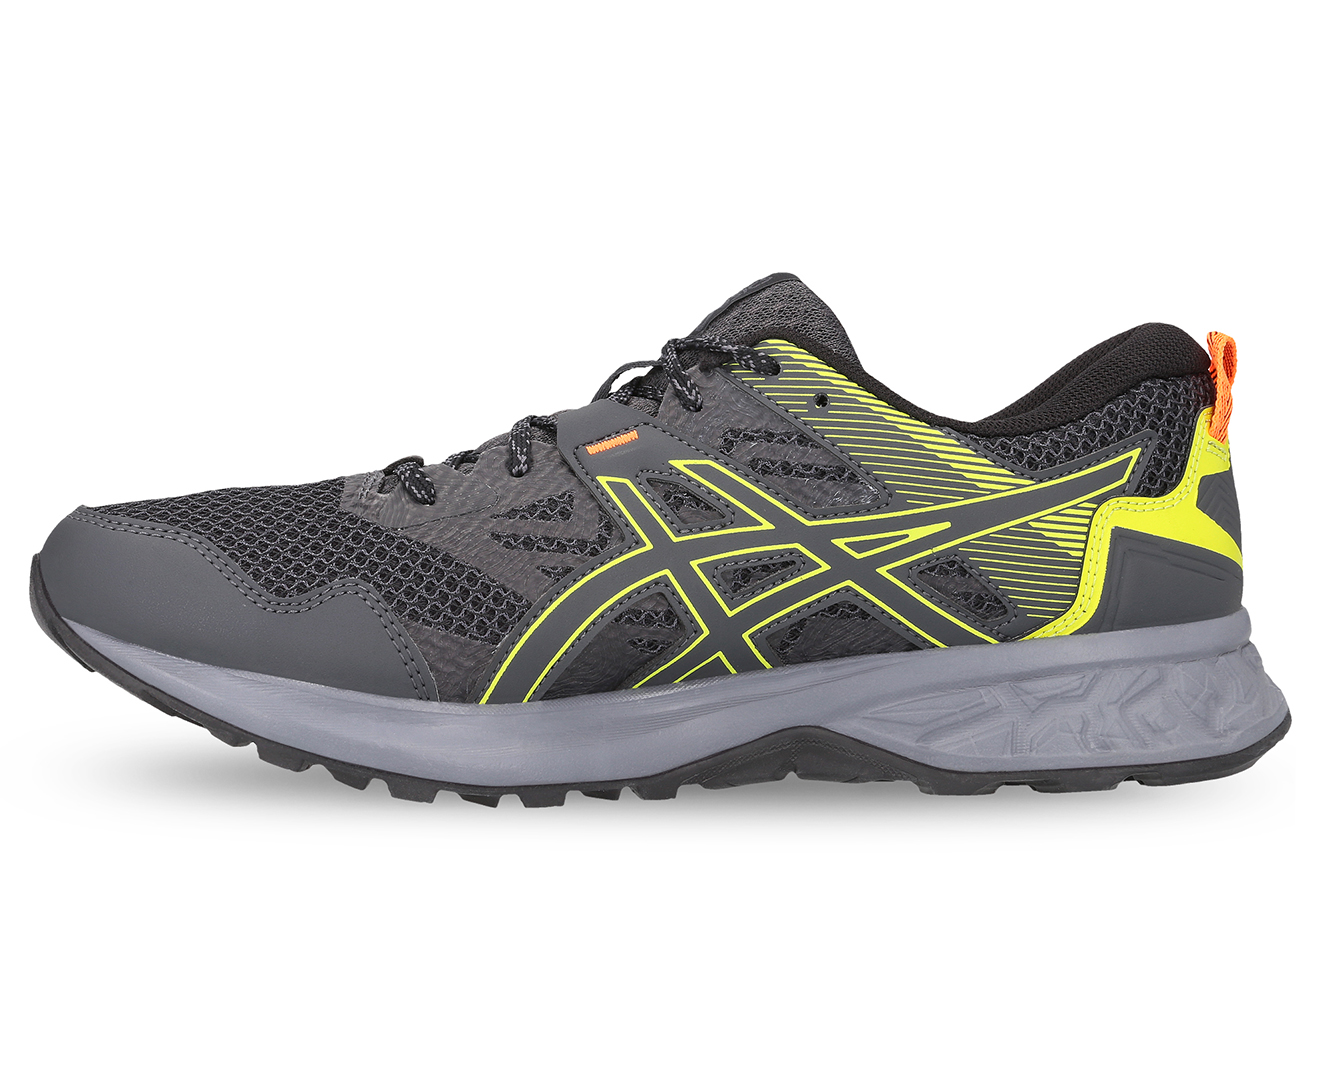 ASICS Men's GEL-Sonoma 5 Trail Running Shoes - Graphite Grey/Black